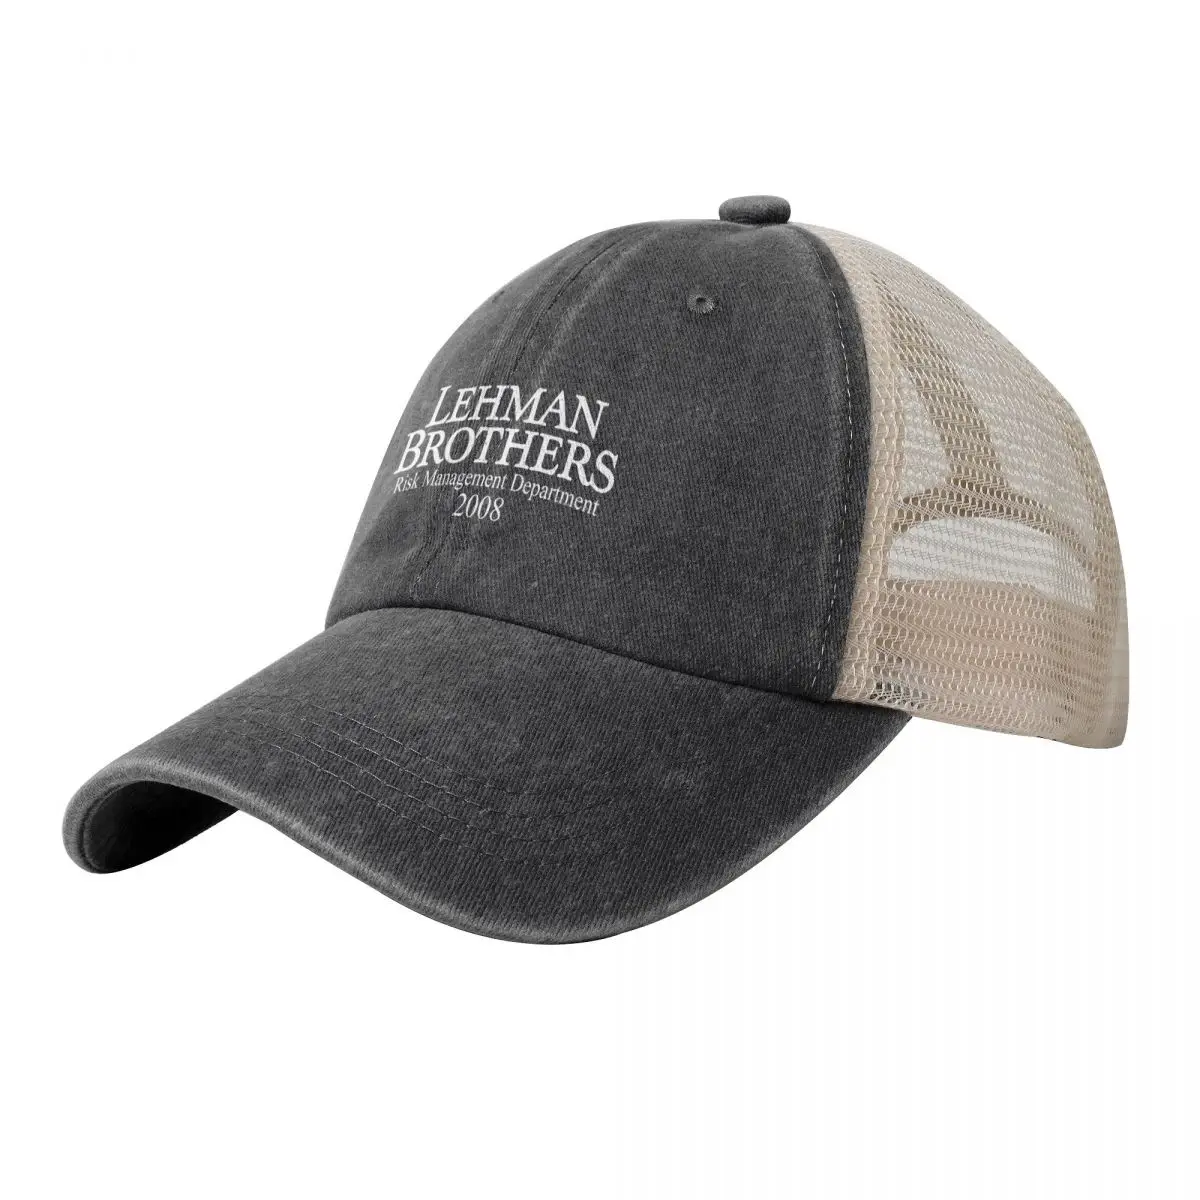 

Lehman Brothers Risk Management Department 2008 Cowboy Mesh Baseball Cap birthday Beach Bag Trucker Hats For Men Women's